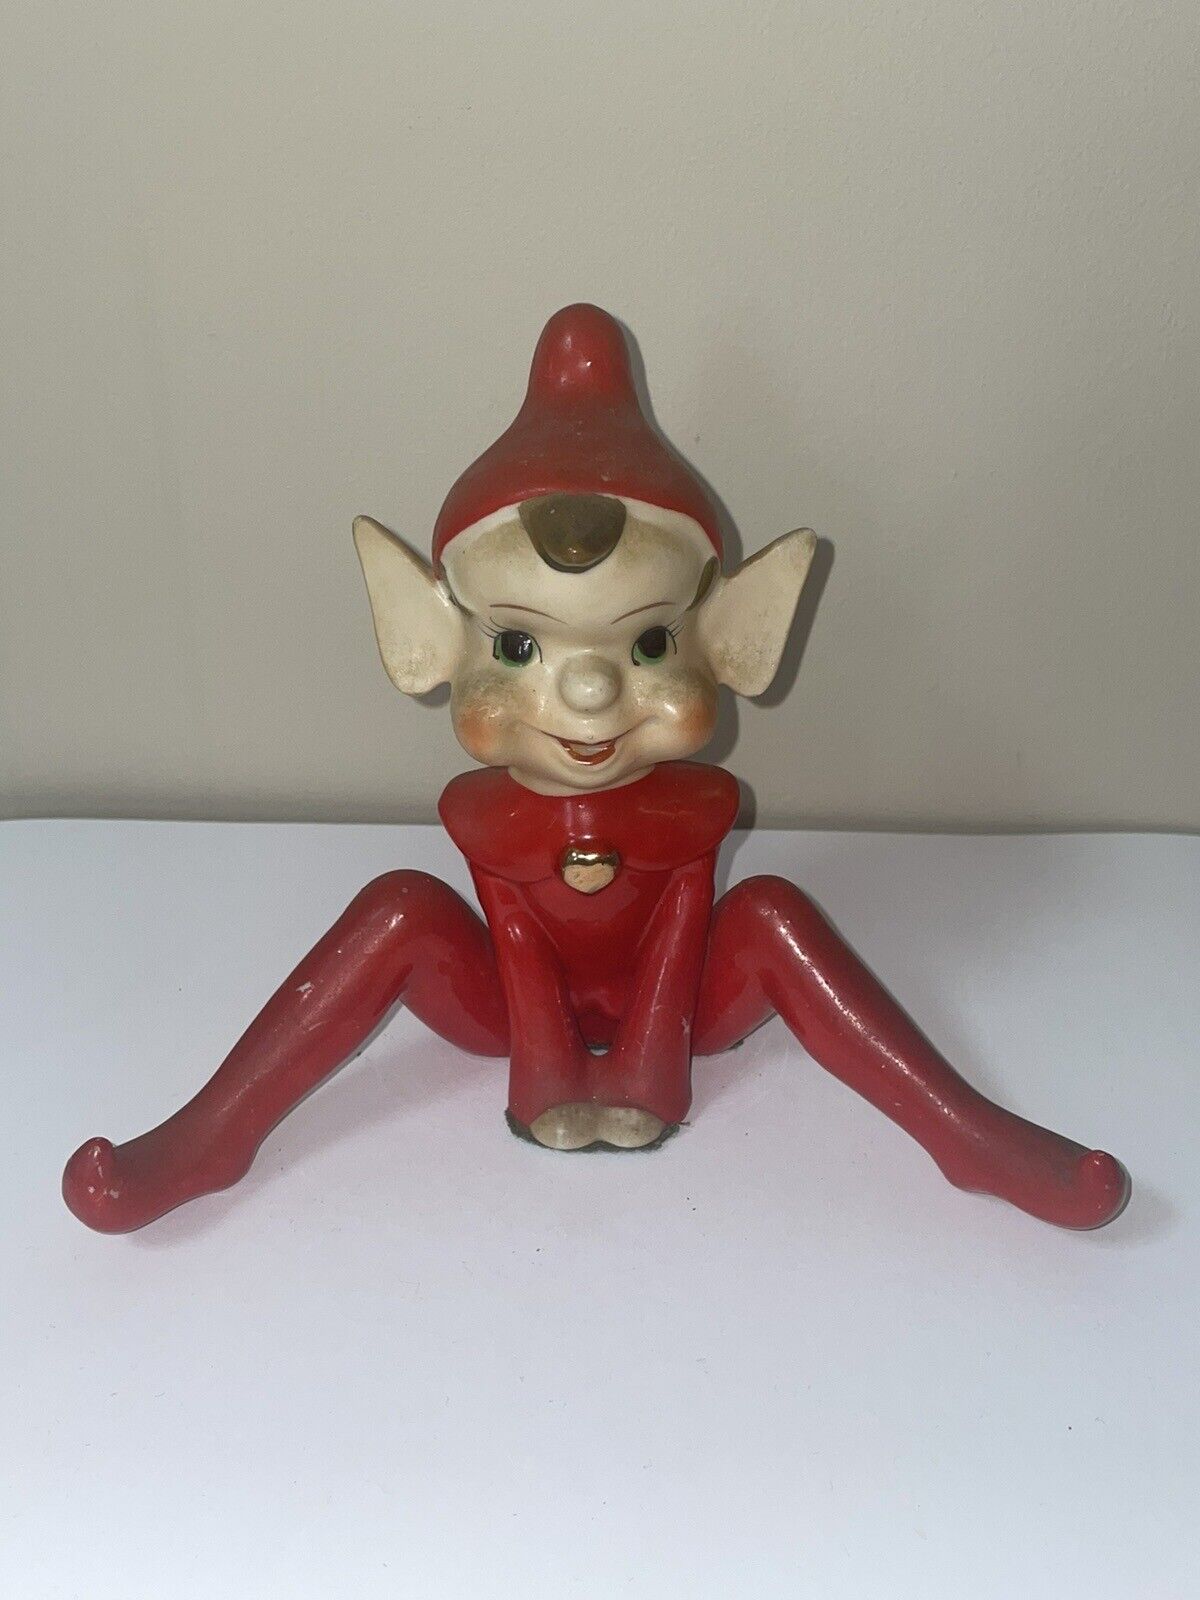 Vintage THAMES Red Painted Porcelain Sitting Elf Figurine MCM Made in Japan